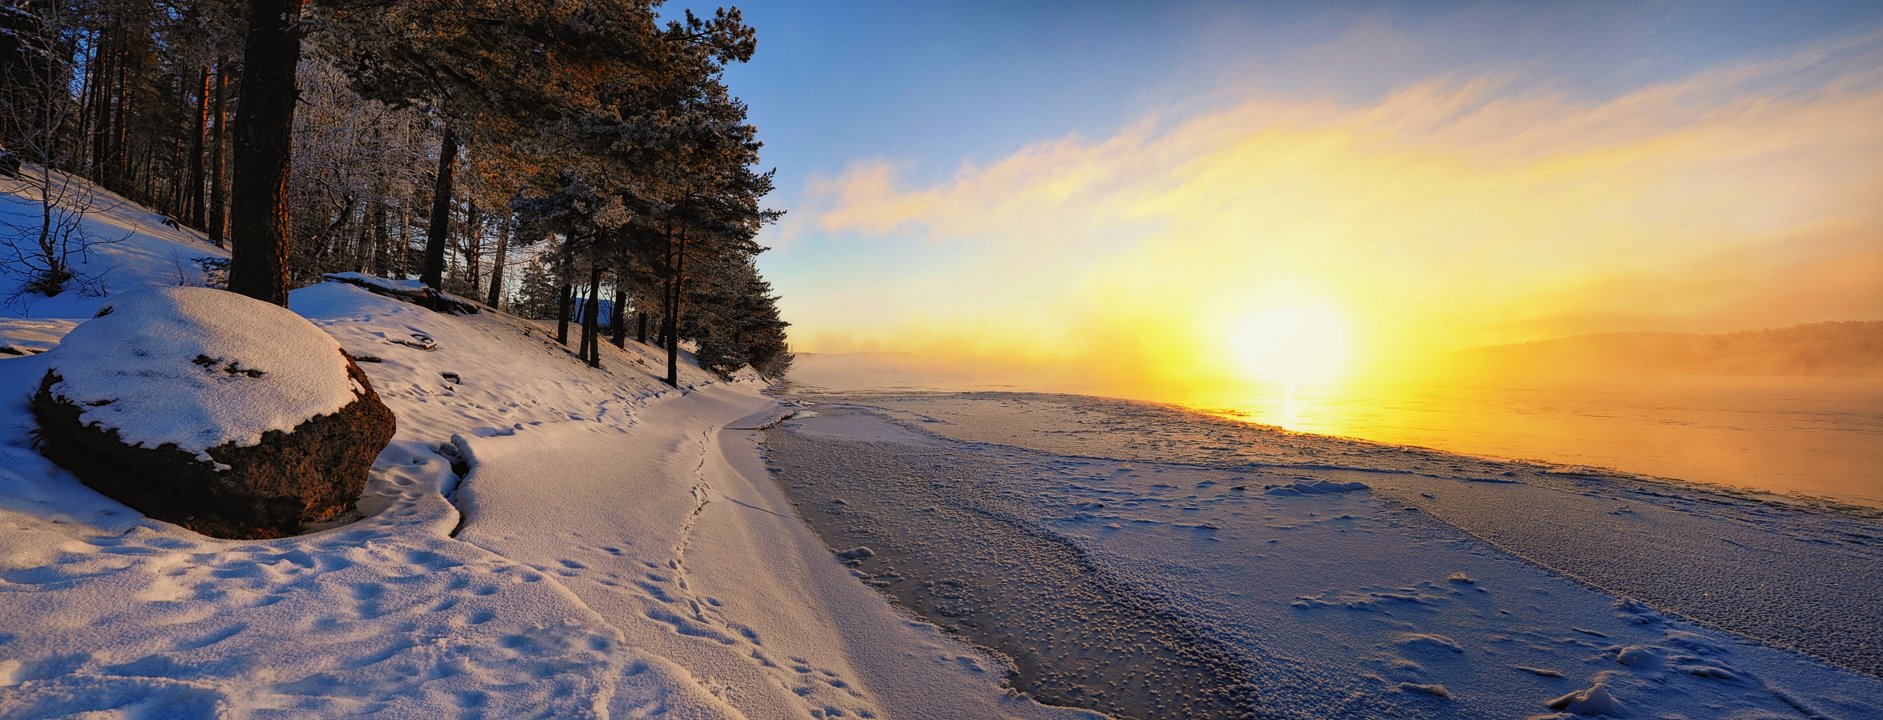 утро,рассвет,зима,январь,мороз,река,вуокса,лед,берег,пейзаж,панорама, Евгений Плетнев